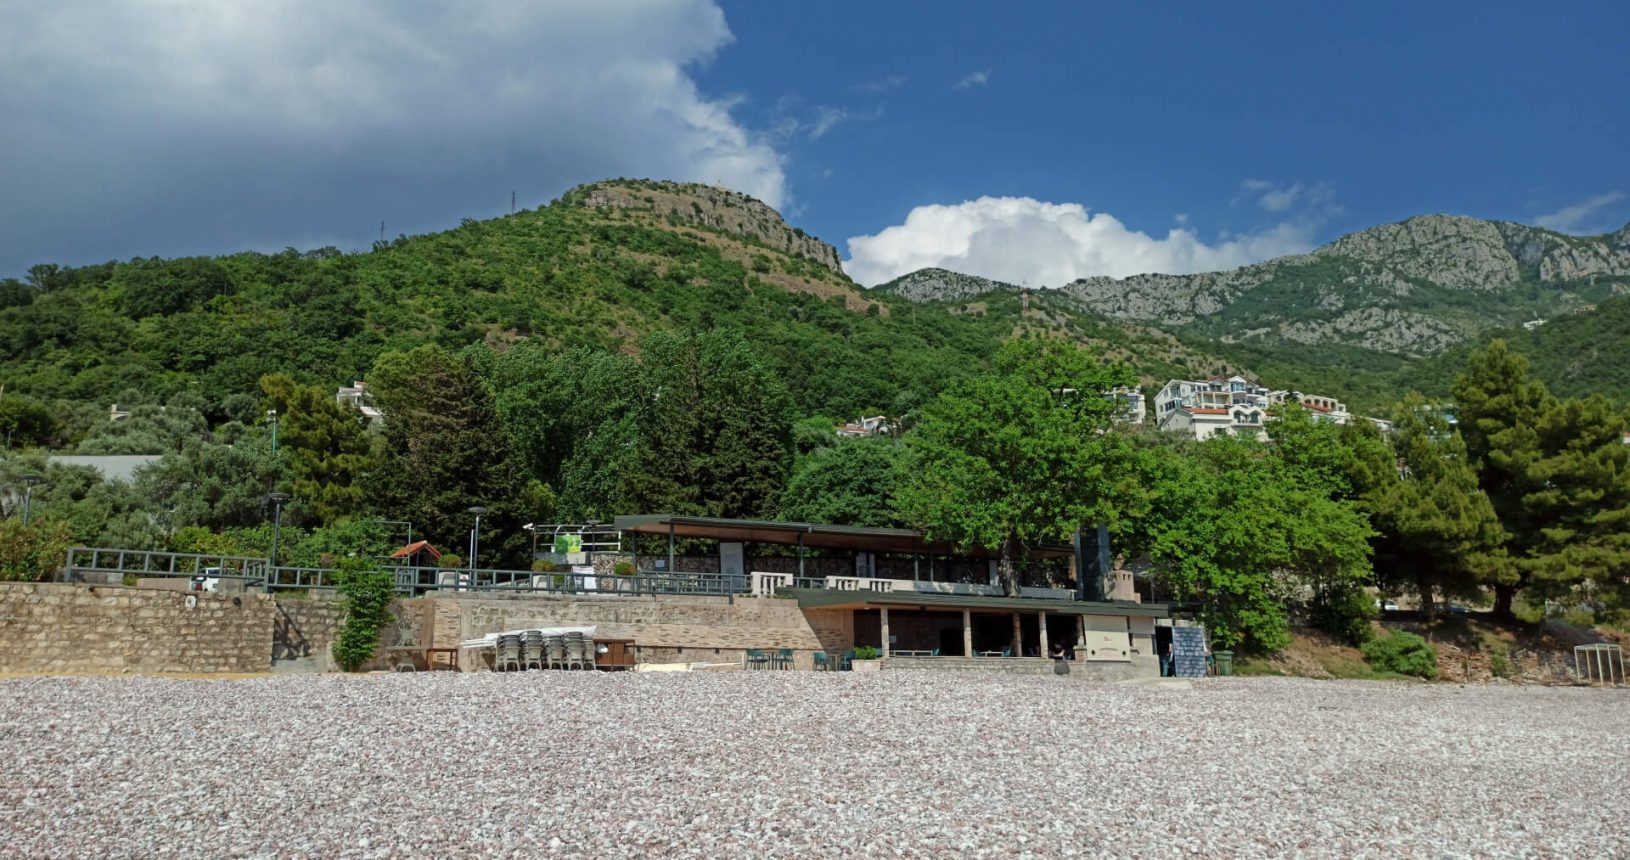 Sveti Stefan Beach. The view to the mountains